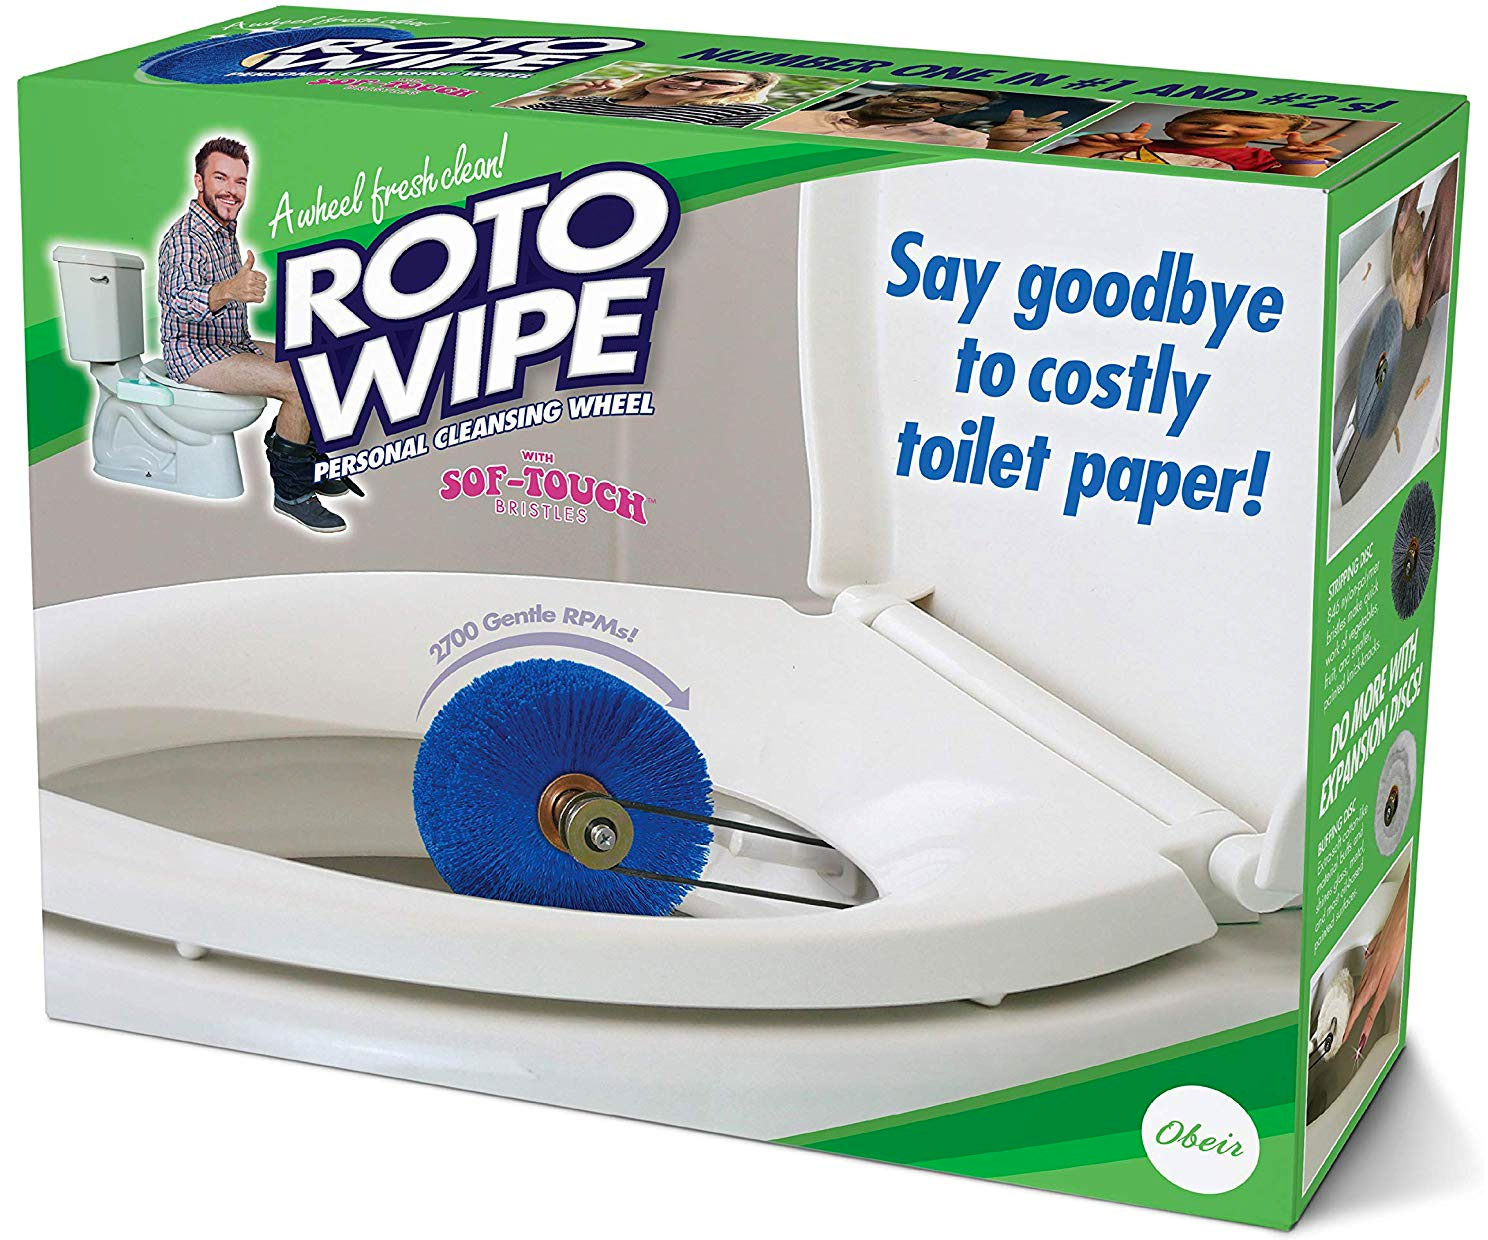 The Roto Wipe